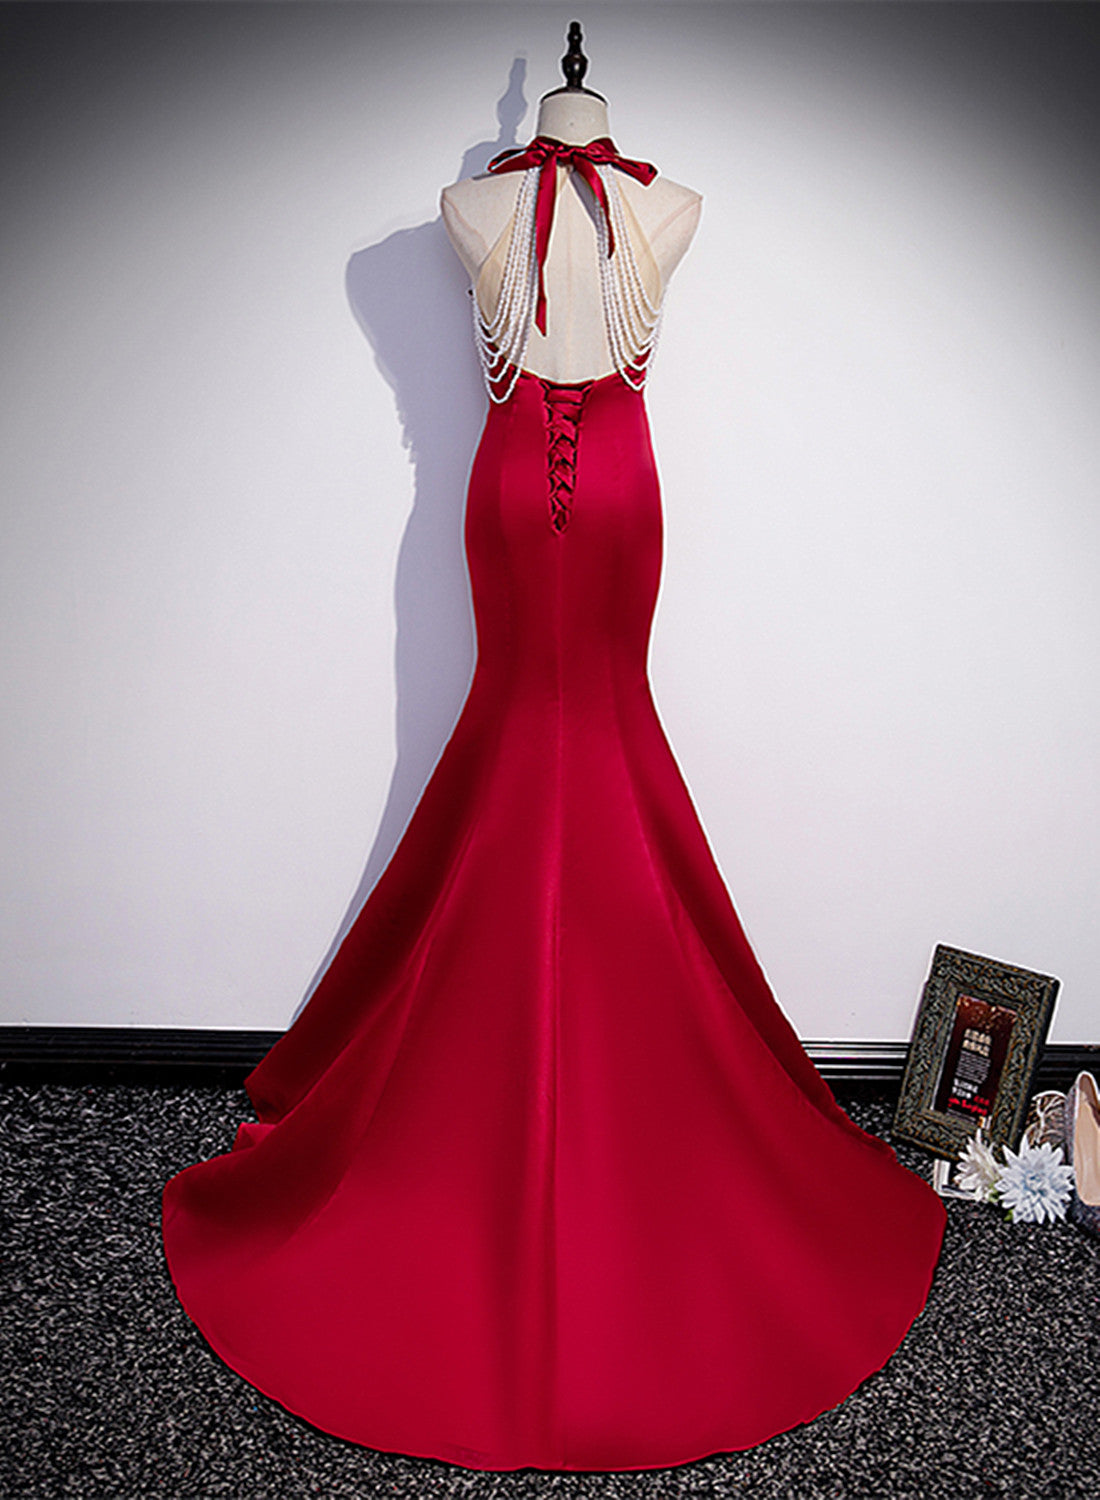 Party Dresses Website, Red Mermaid Satin Long Party Dress Formal Dress, Lace-up Red Prom Dress